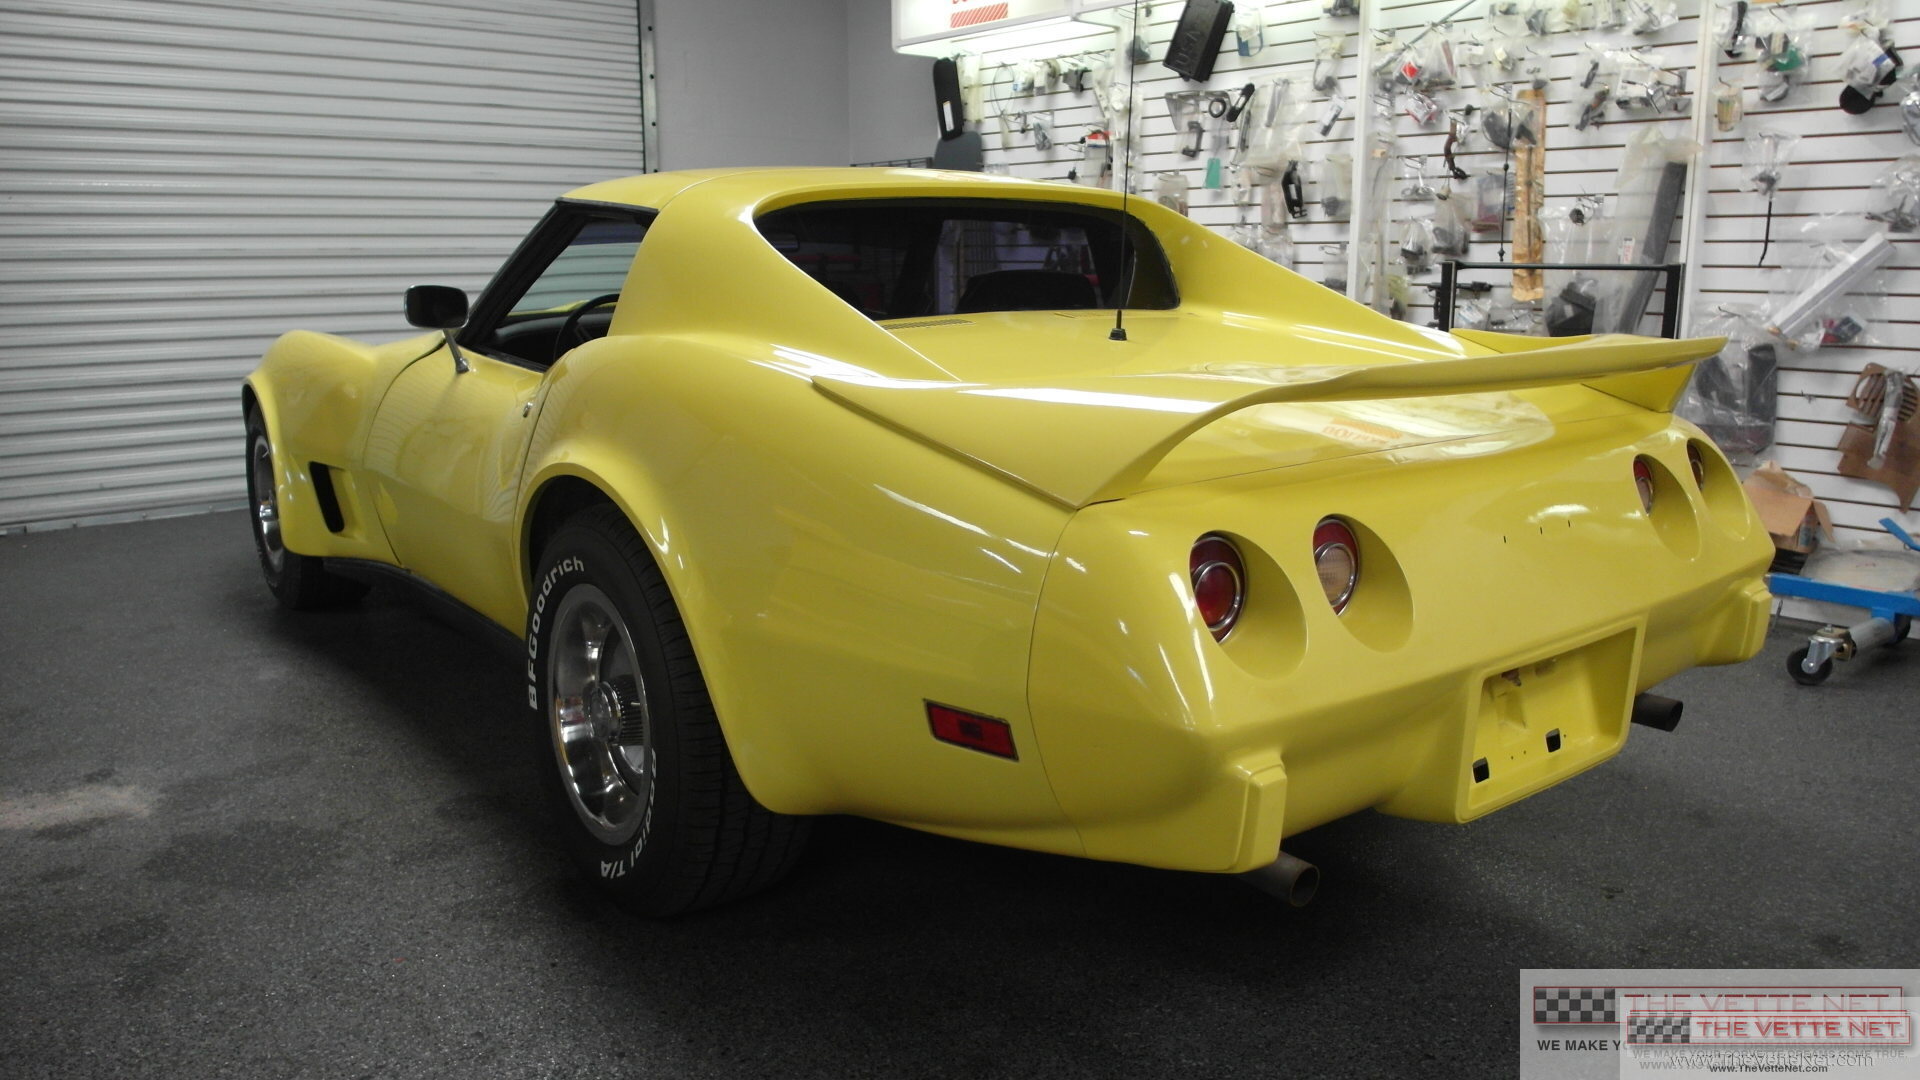 1974 Corvette T-Top Yellow